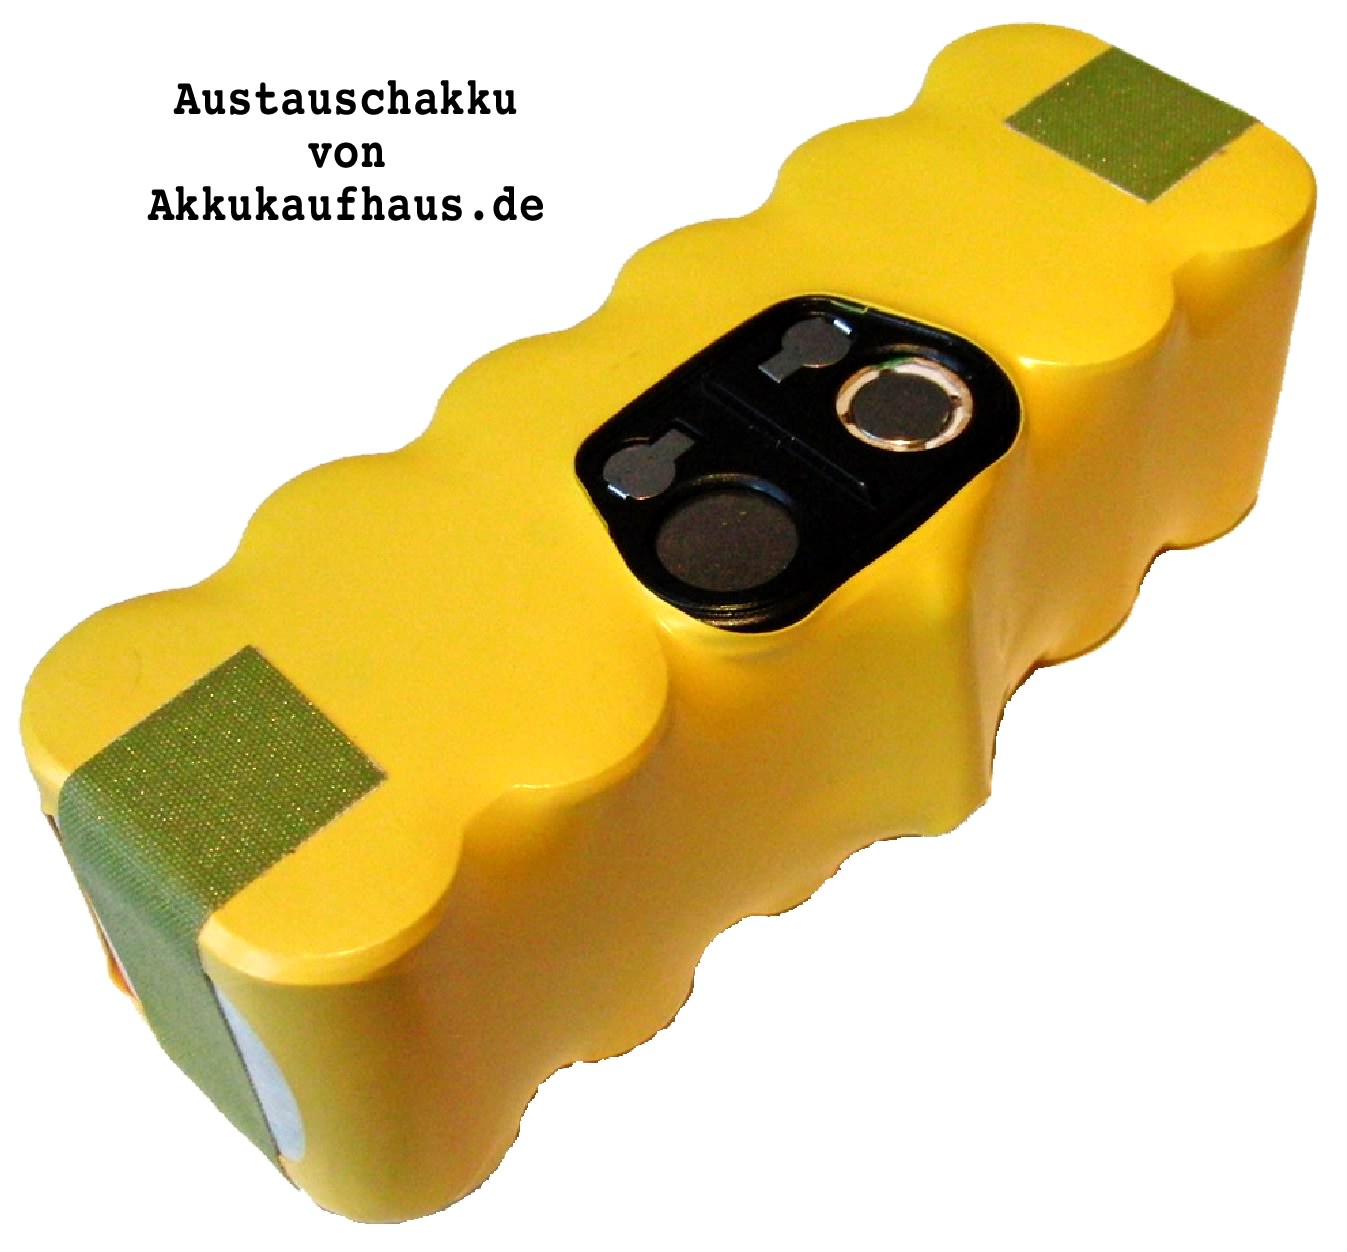 Sanyo Akku für iRobot Roomba 3000mAh made in Germany NiMH (521 / 531 / 534 / 555 / 5